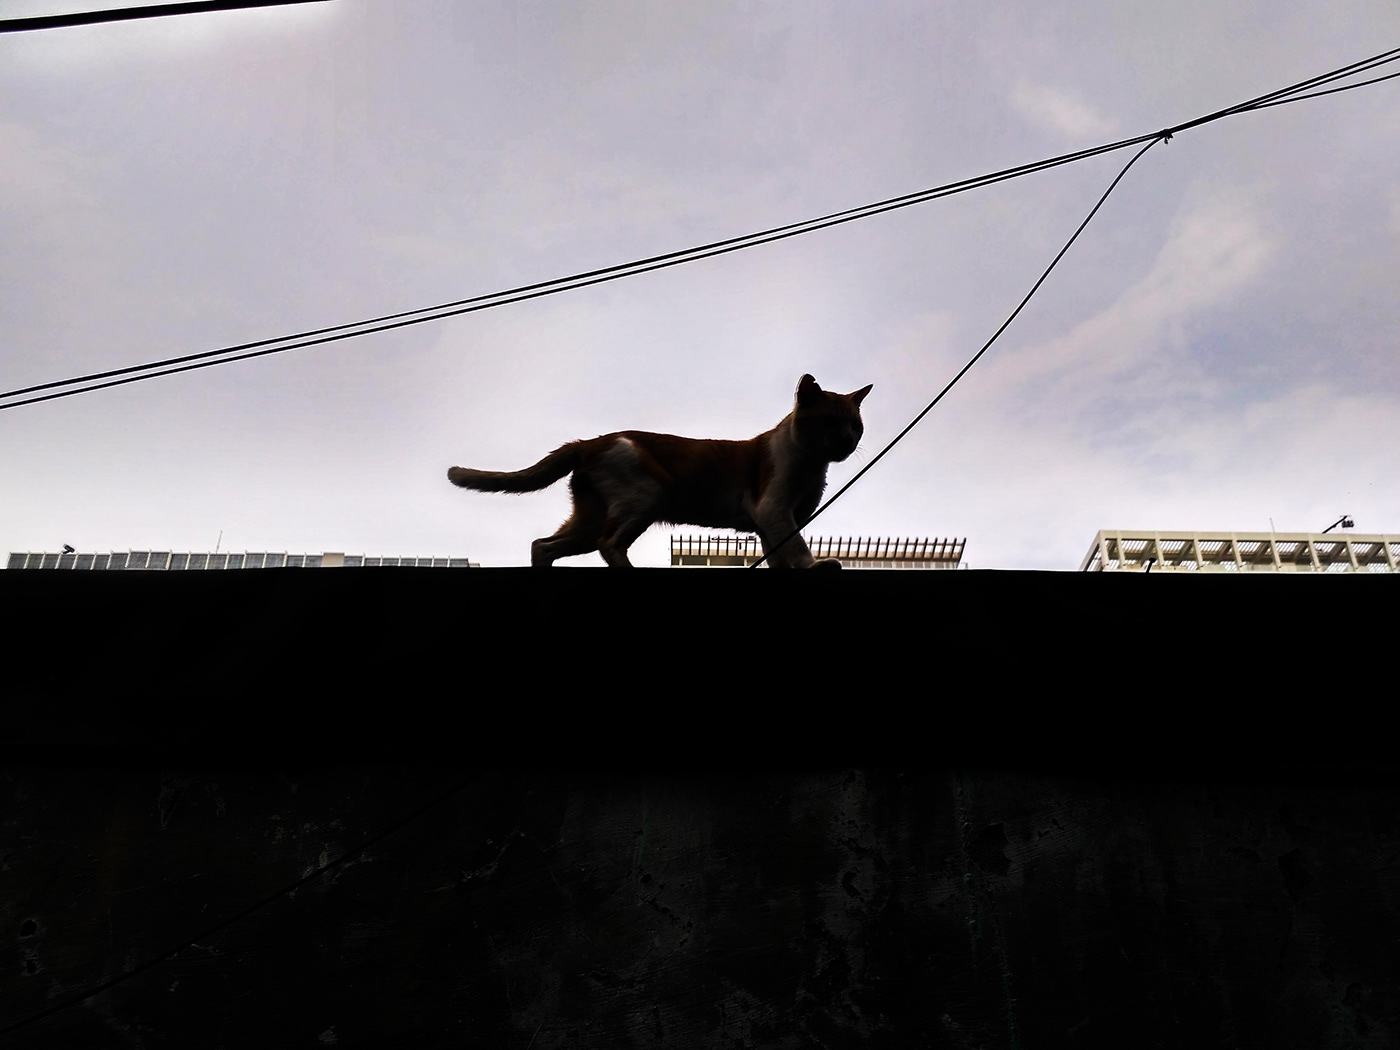 foto ini adalah foto kucing yang sedang berada diatas atap suatu rumah dan foto ini diambil menggunakan teknik fotography ballance menaruh objek berada ditengah sehingga terlihat ballance.(fotography dasar semester 2)